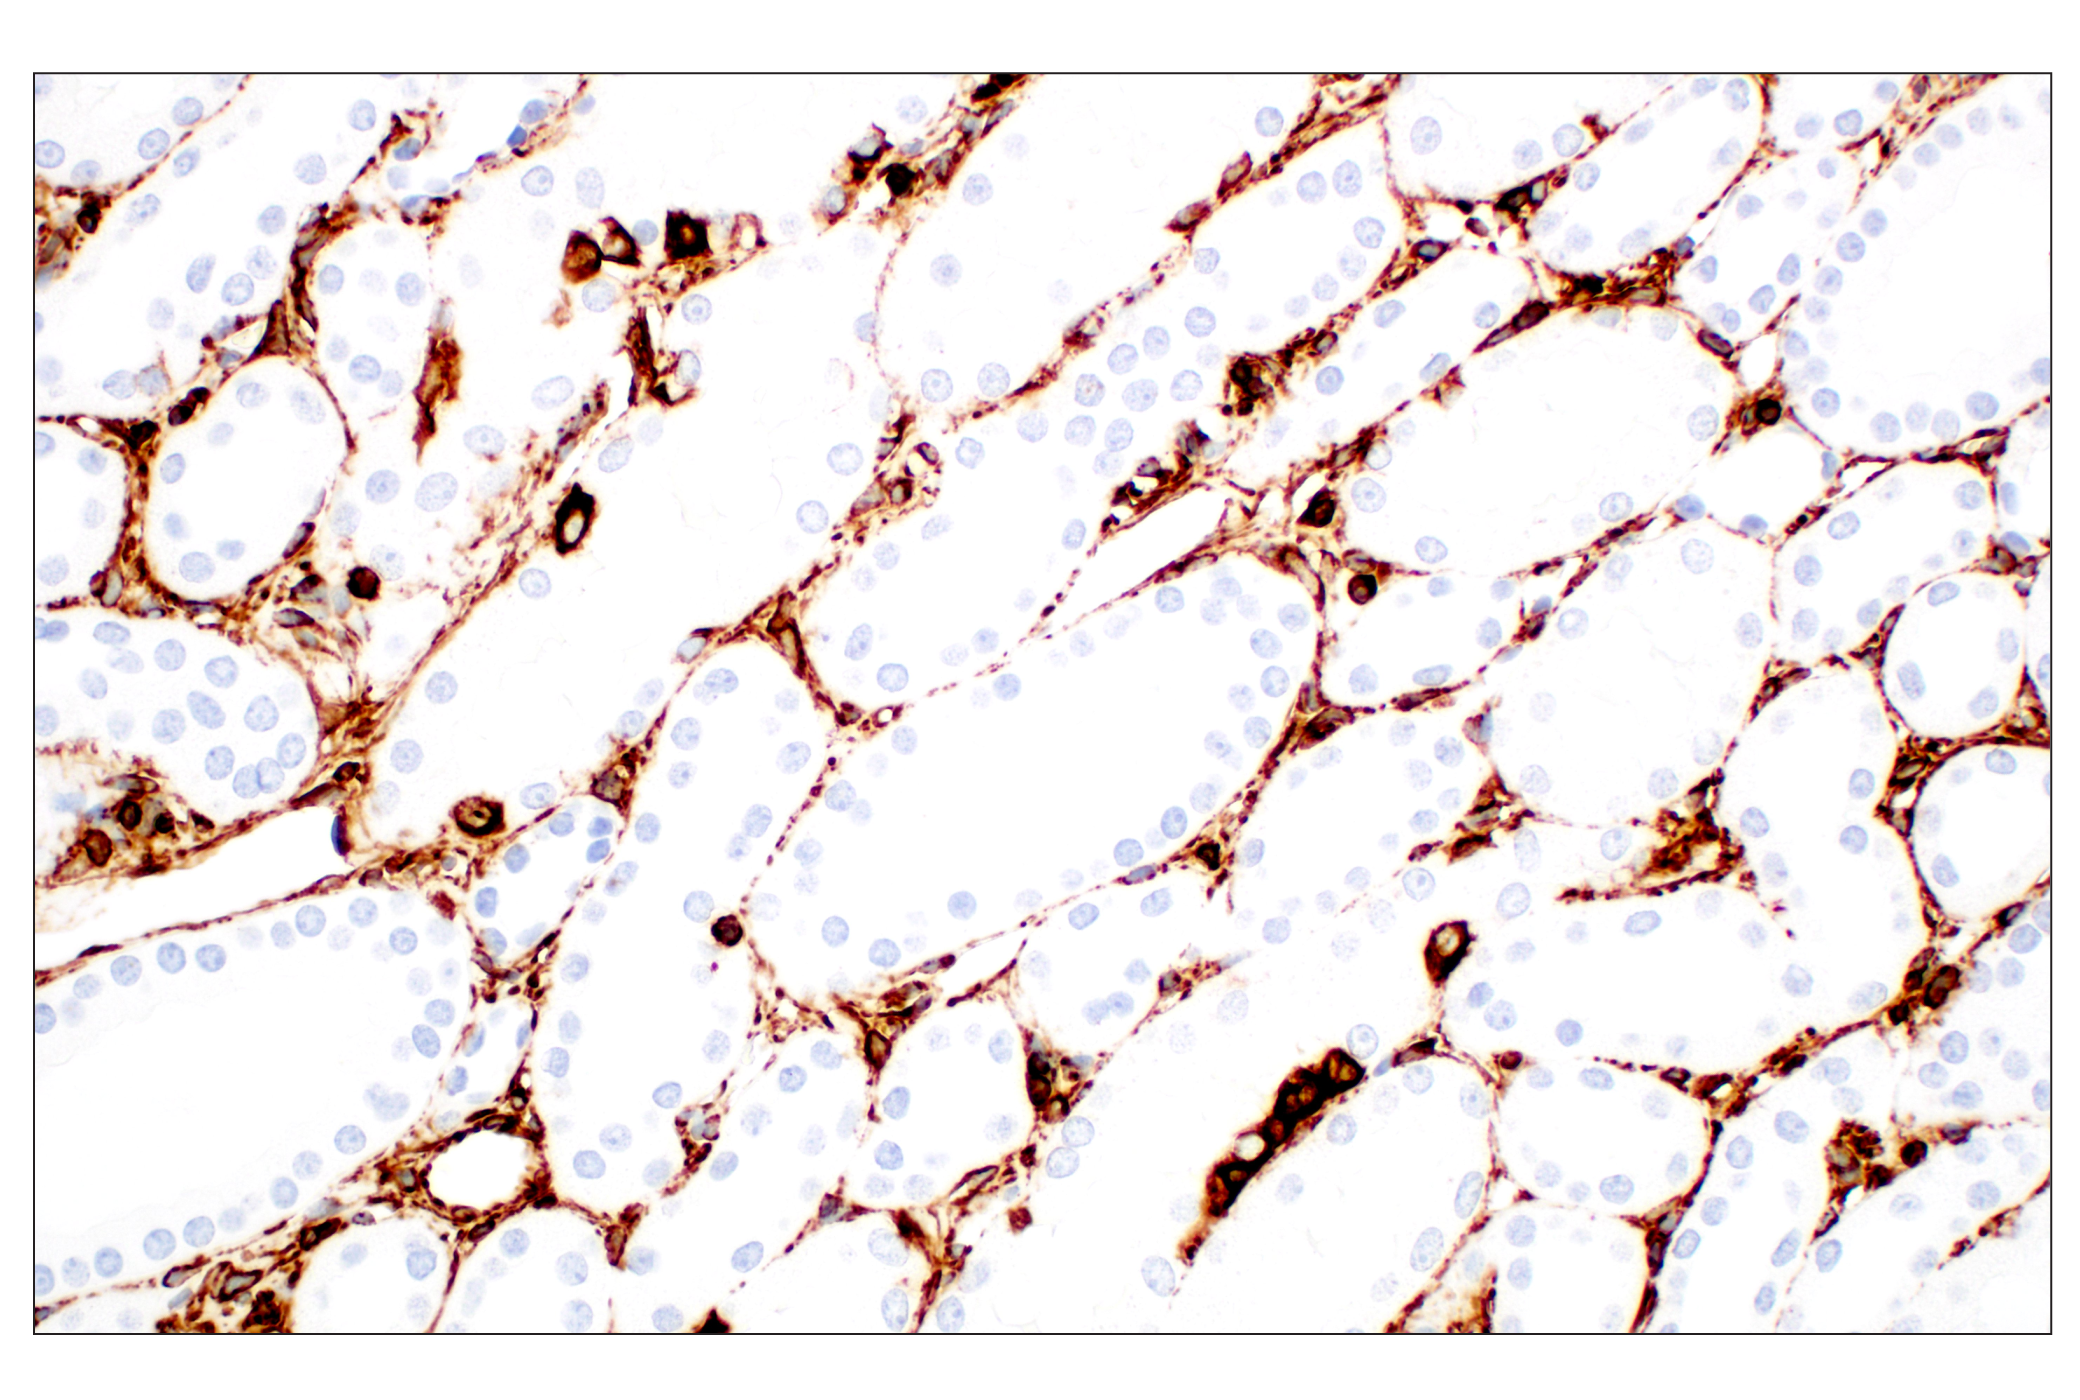  Image 44: Cytoskeletal Marker Antibody Sampler Kit